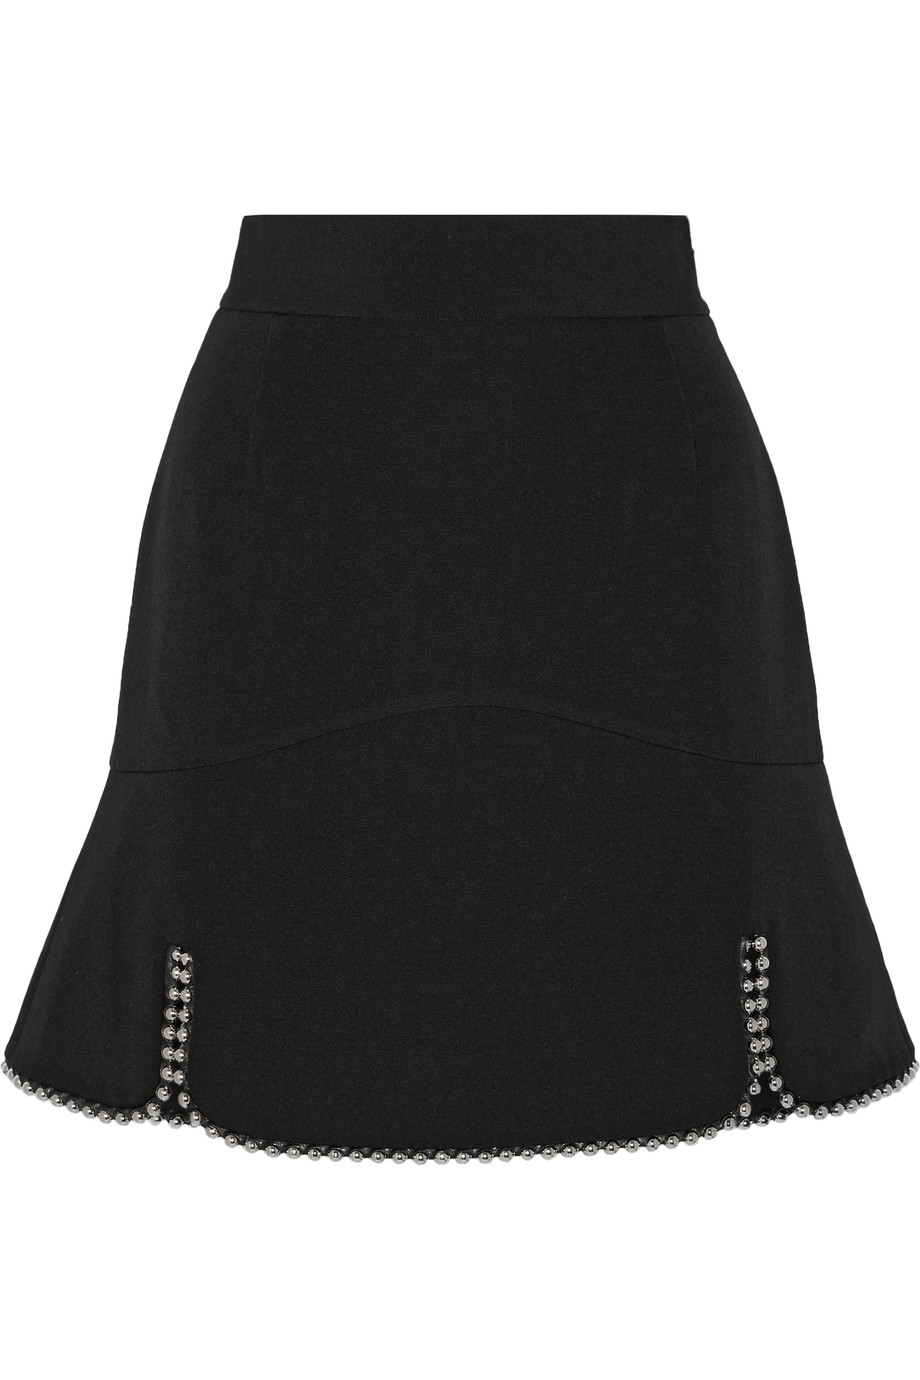 Alexander Wang Embellished Wool-gabardine Mini Skirt | ModeSens